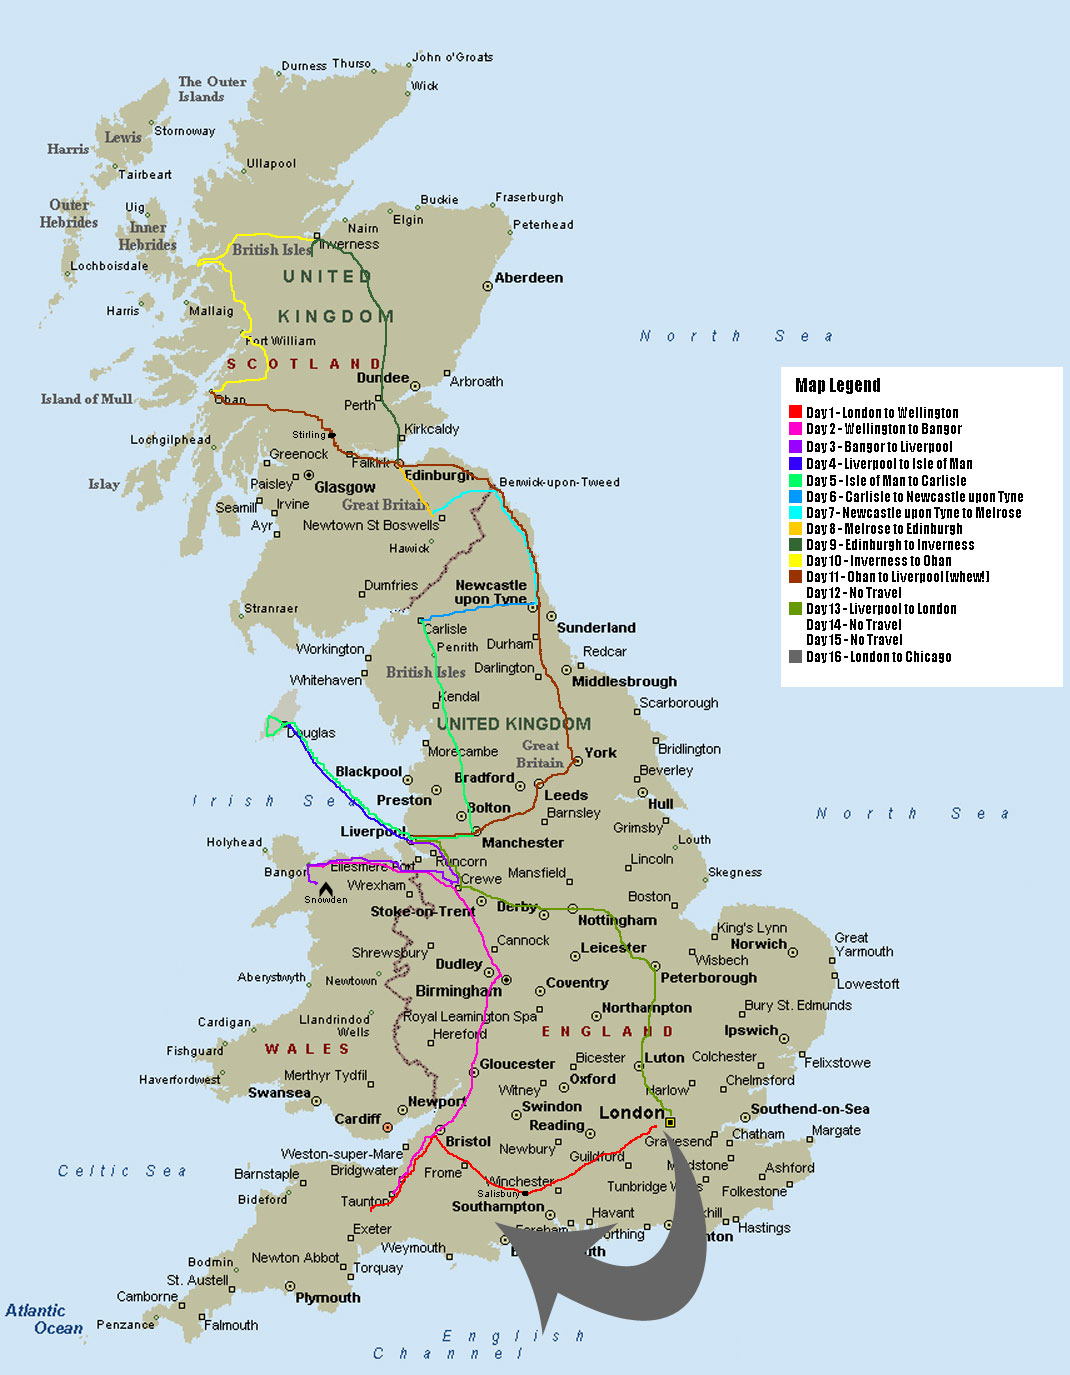 Travel Route around Britain